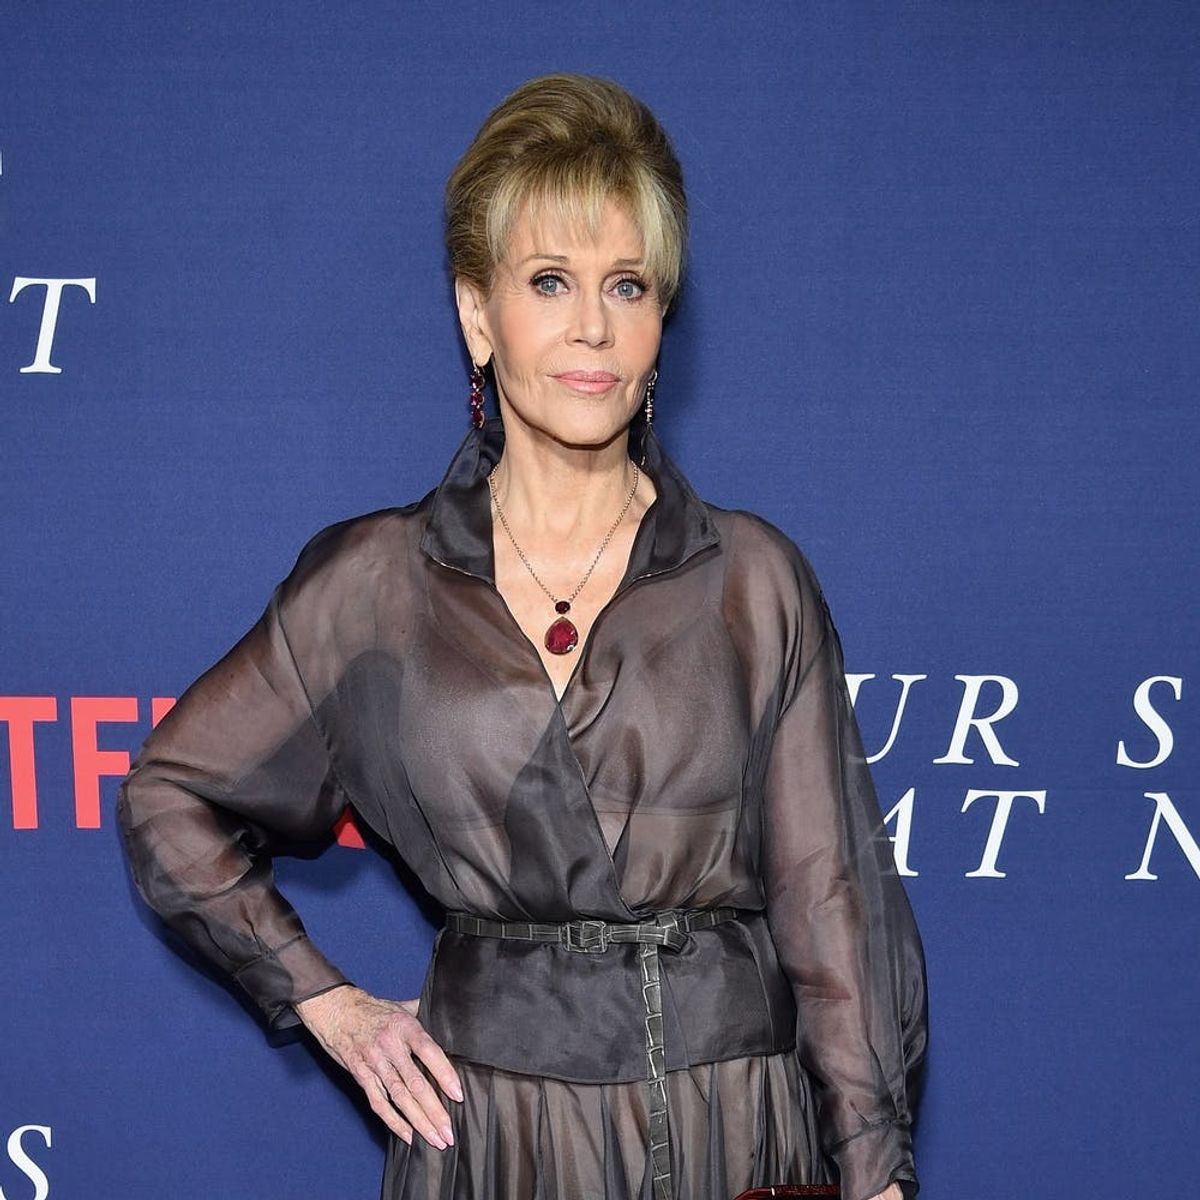 Jane Fonda Says “No Thanks” to Photoshop for Latest Magazine Cover